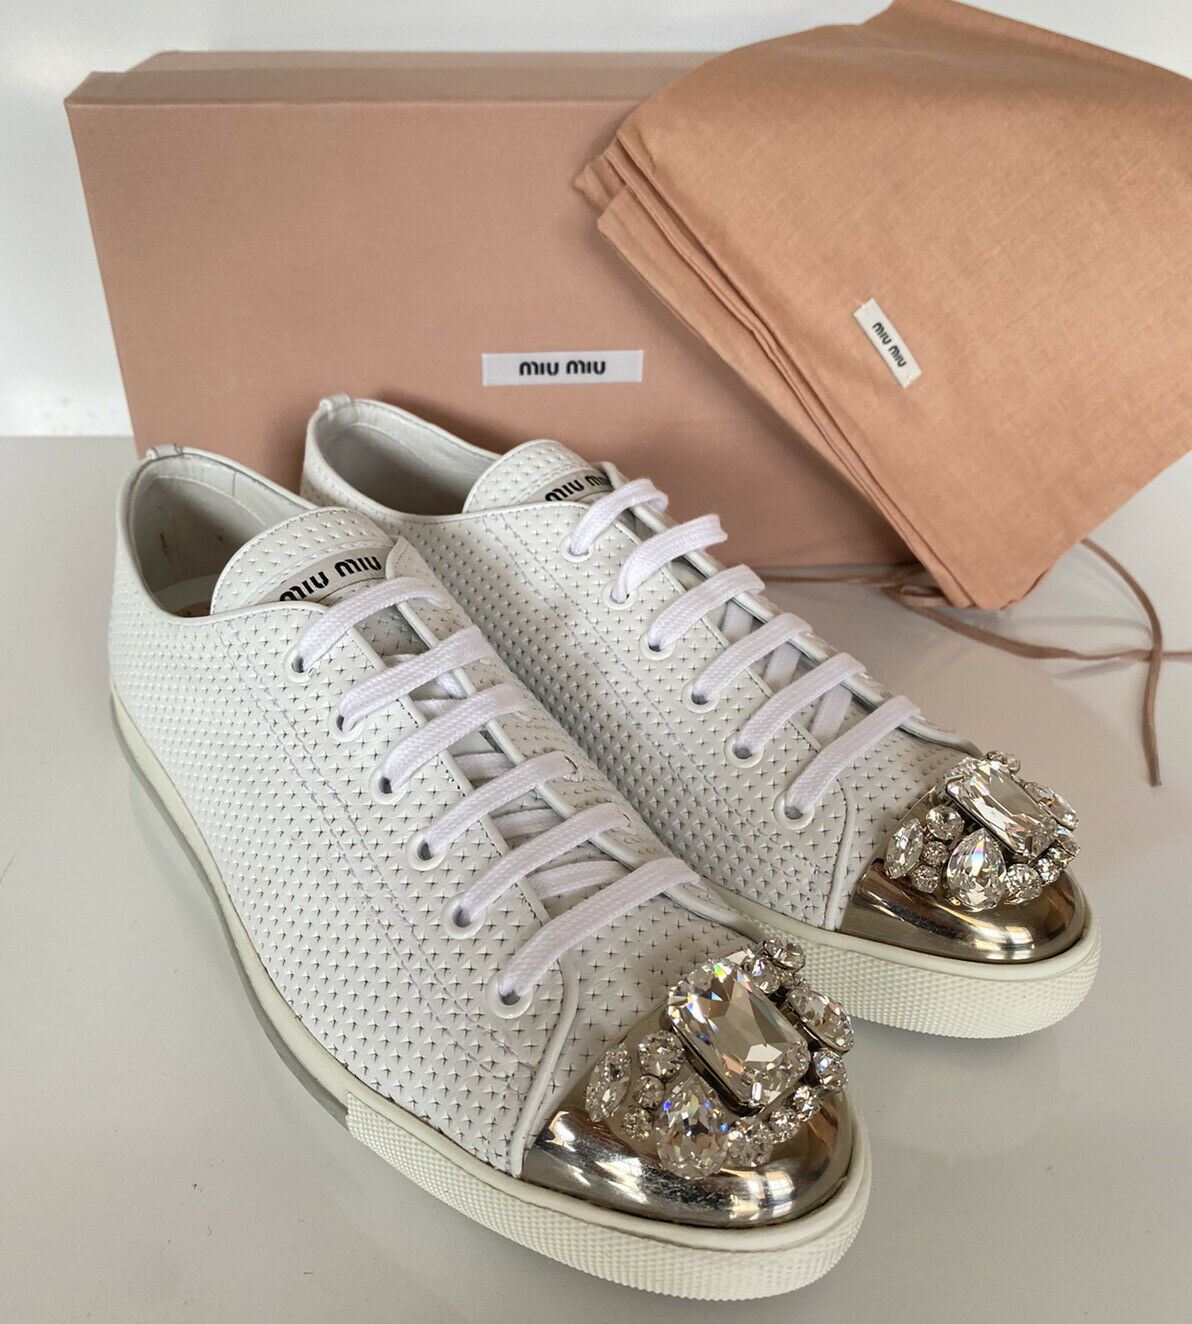 Miu Miu Perforated Jewel Embellished Cap Toe White Leather Sneakers 10.5 5E8558